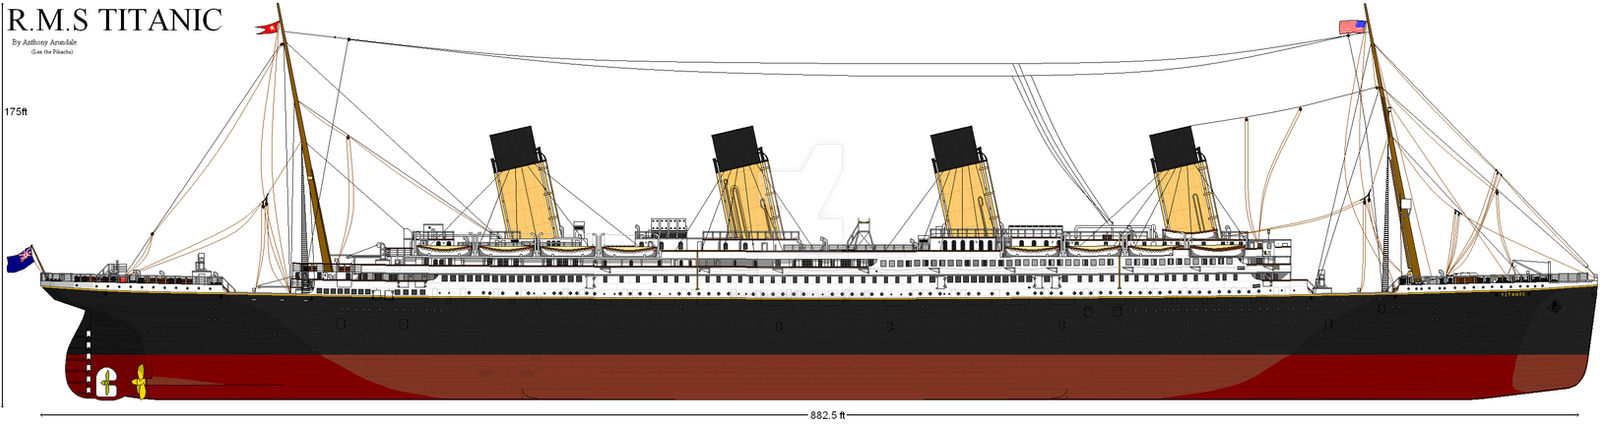 RMS TITANIC :2013 Update: